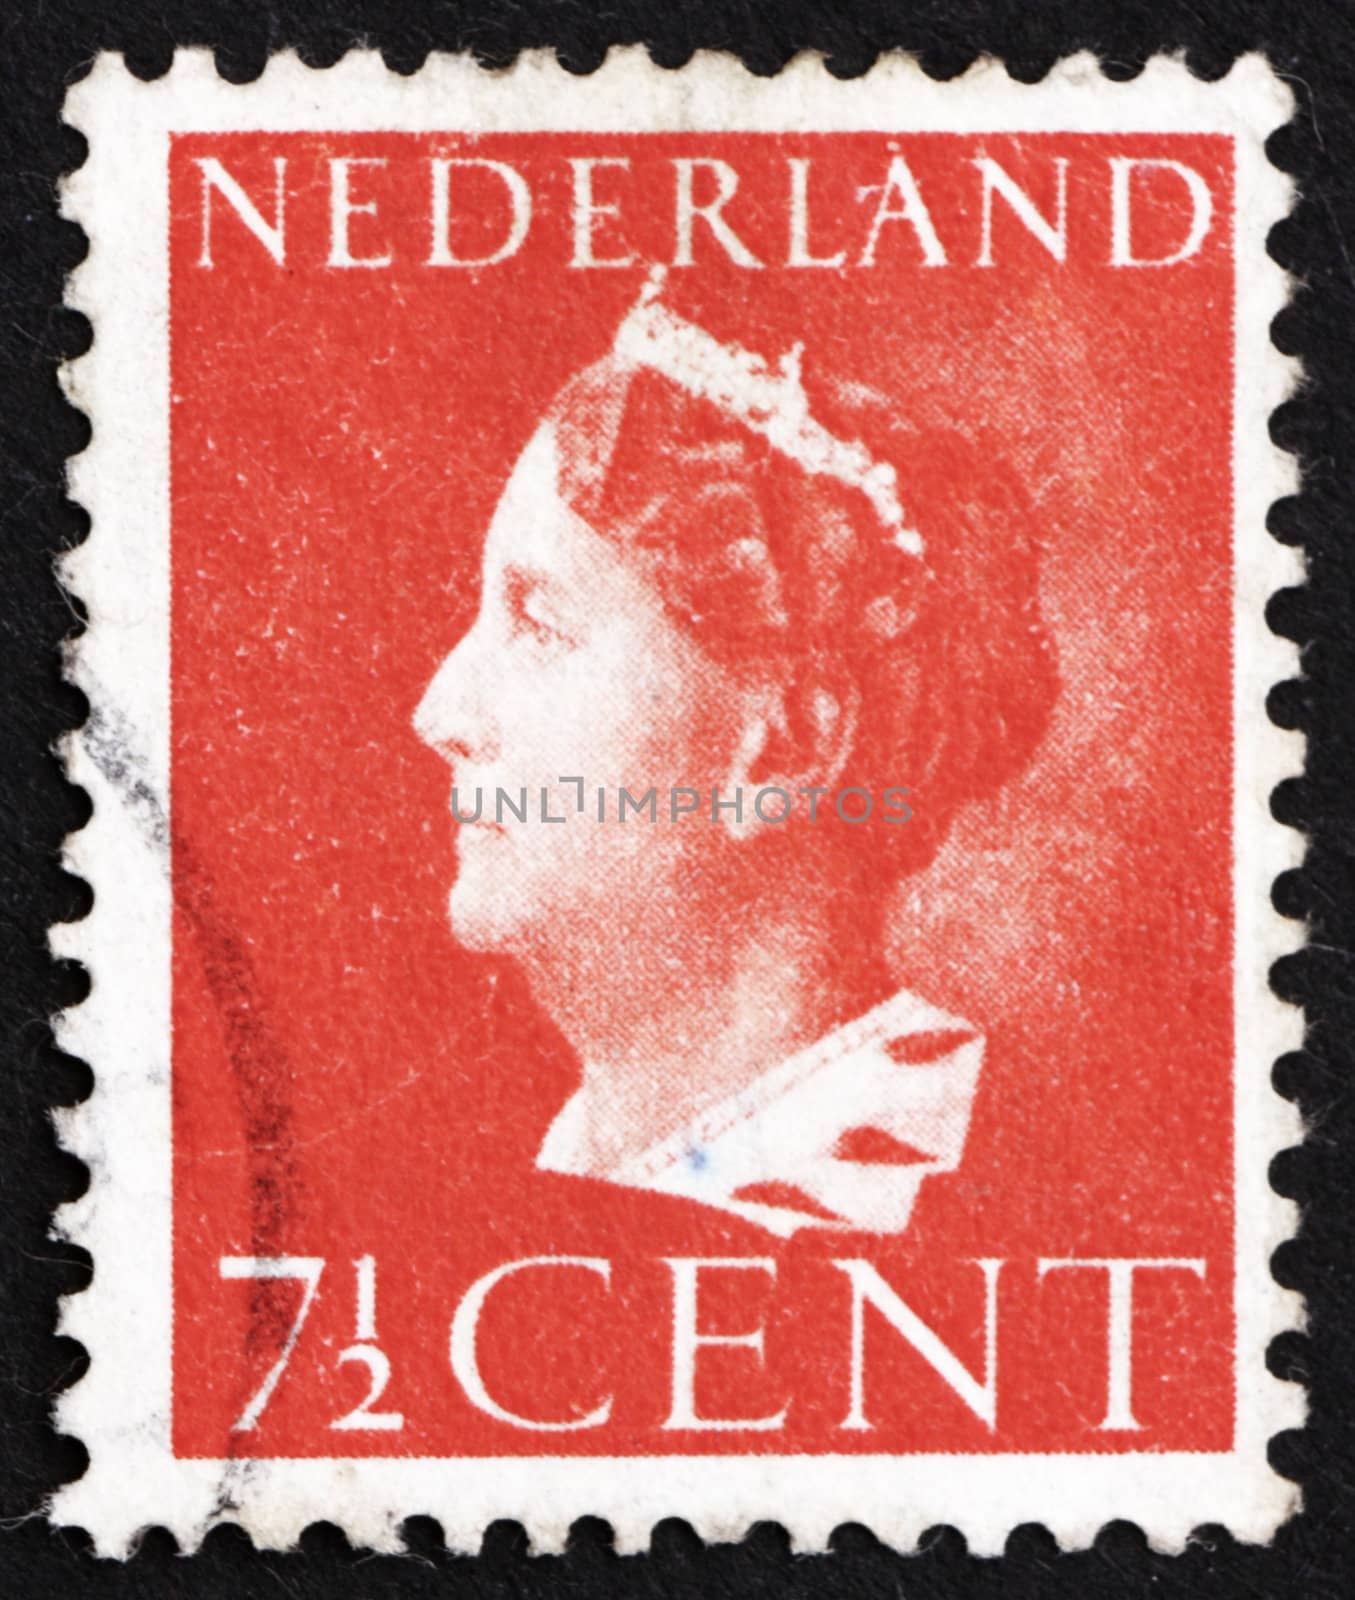 NETHERLANDS - CIRCA 1940: a stamp printed in the Netherlands shows Queen Wilhelmina, circa 1940